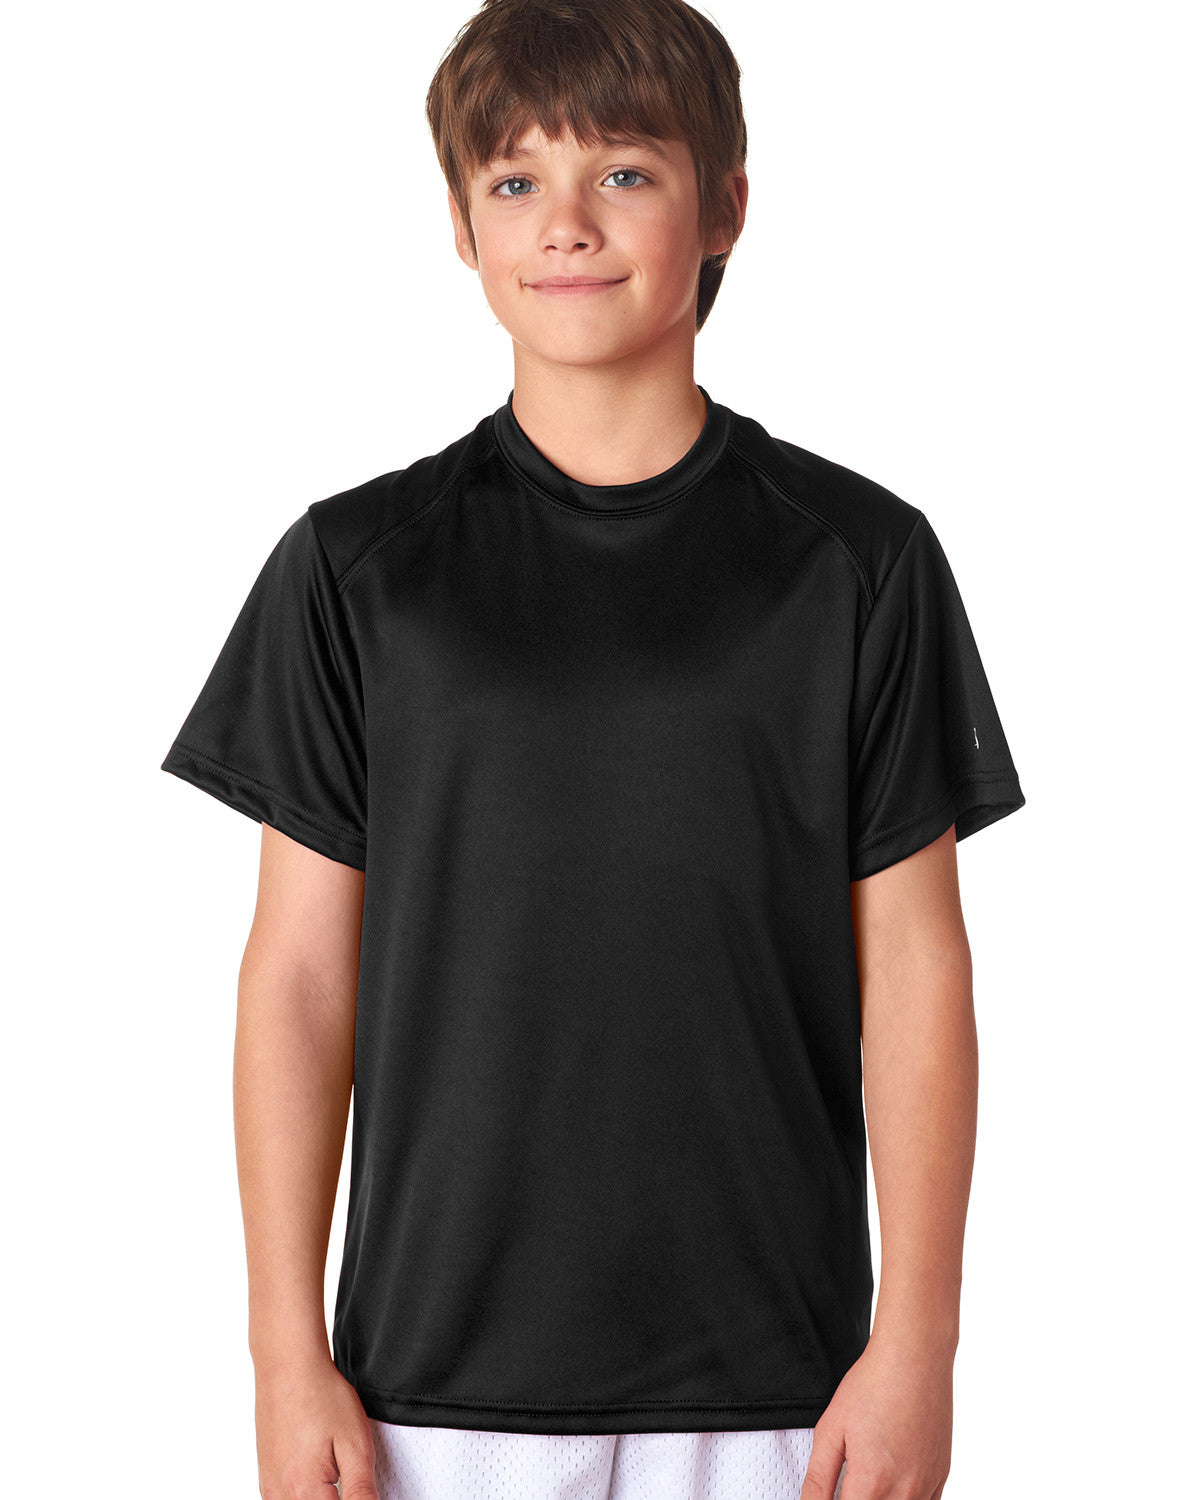 Youth B-dry Performance Shirt